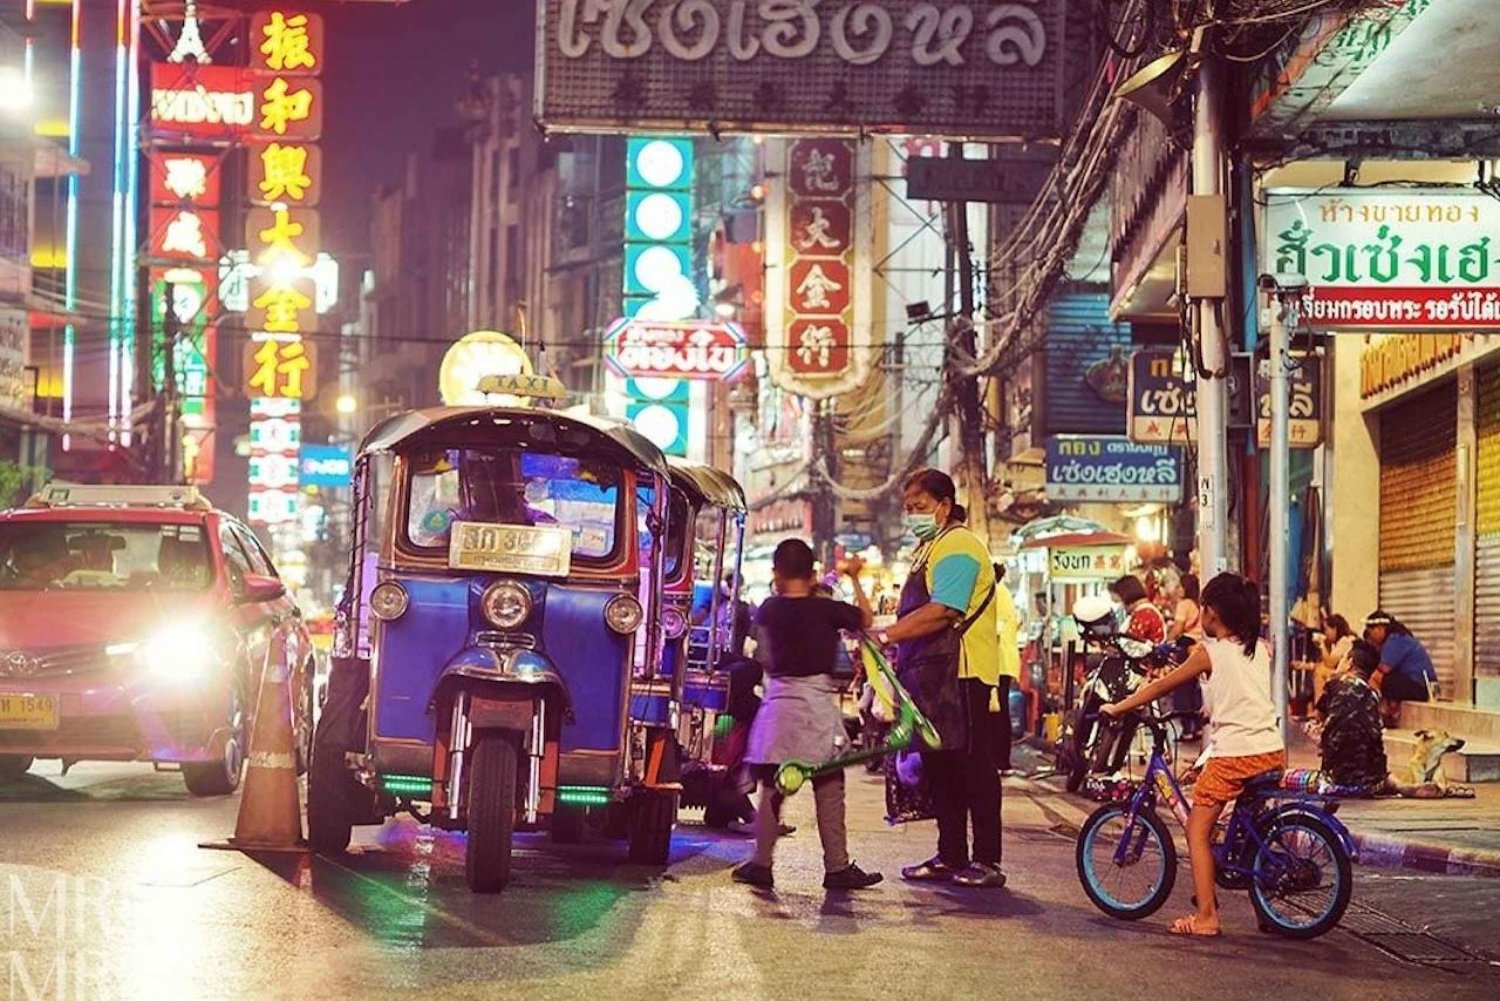 Amazing Tuk-Tuk Tour Bangkok By Night with Chinatown Street